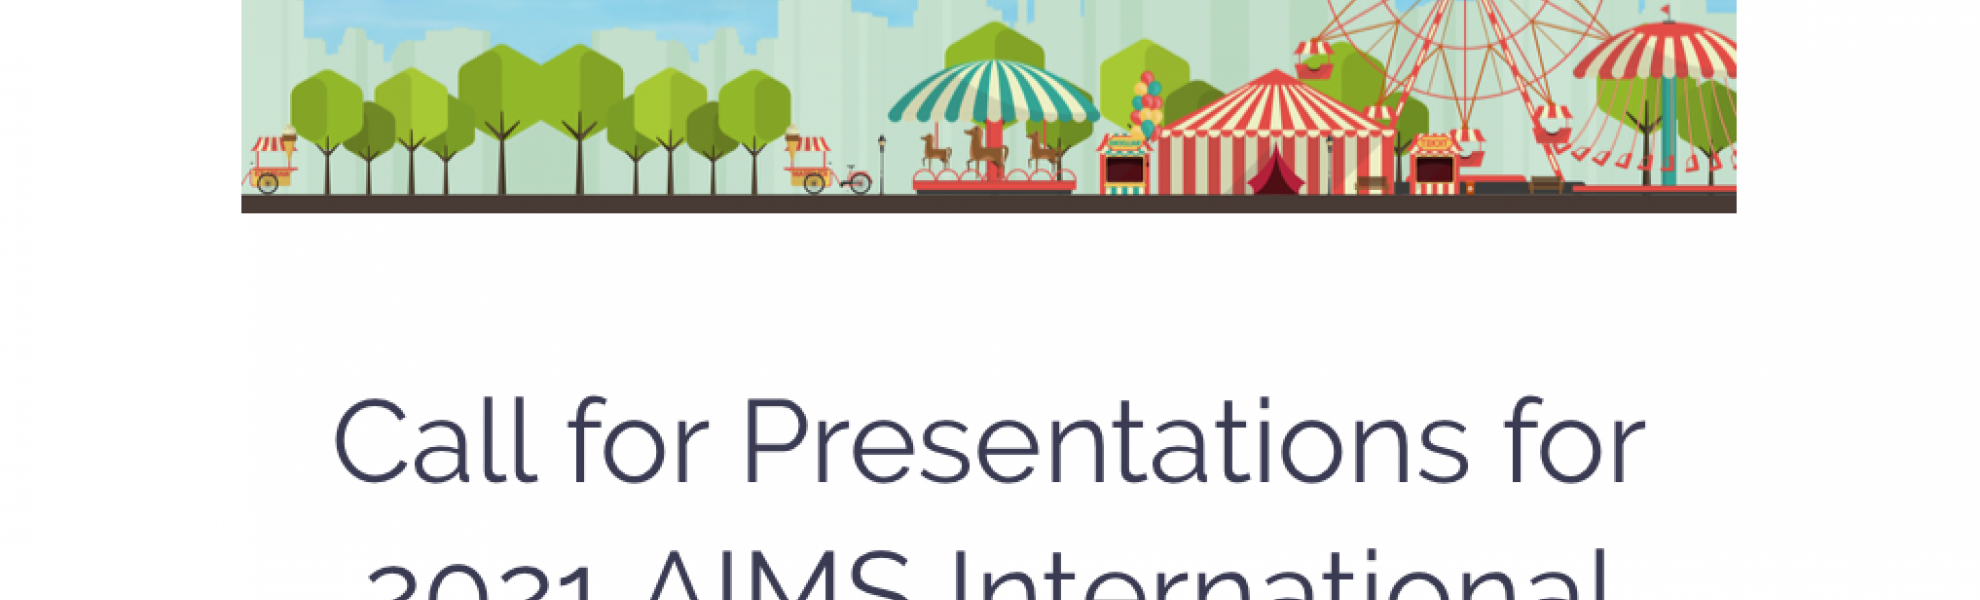 2021 AIMS International Safety Seminar Call for Presentations